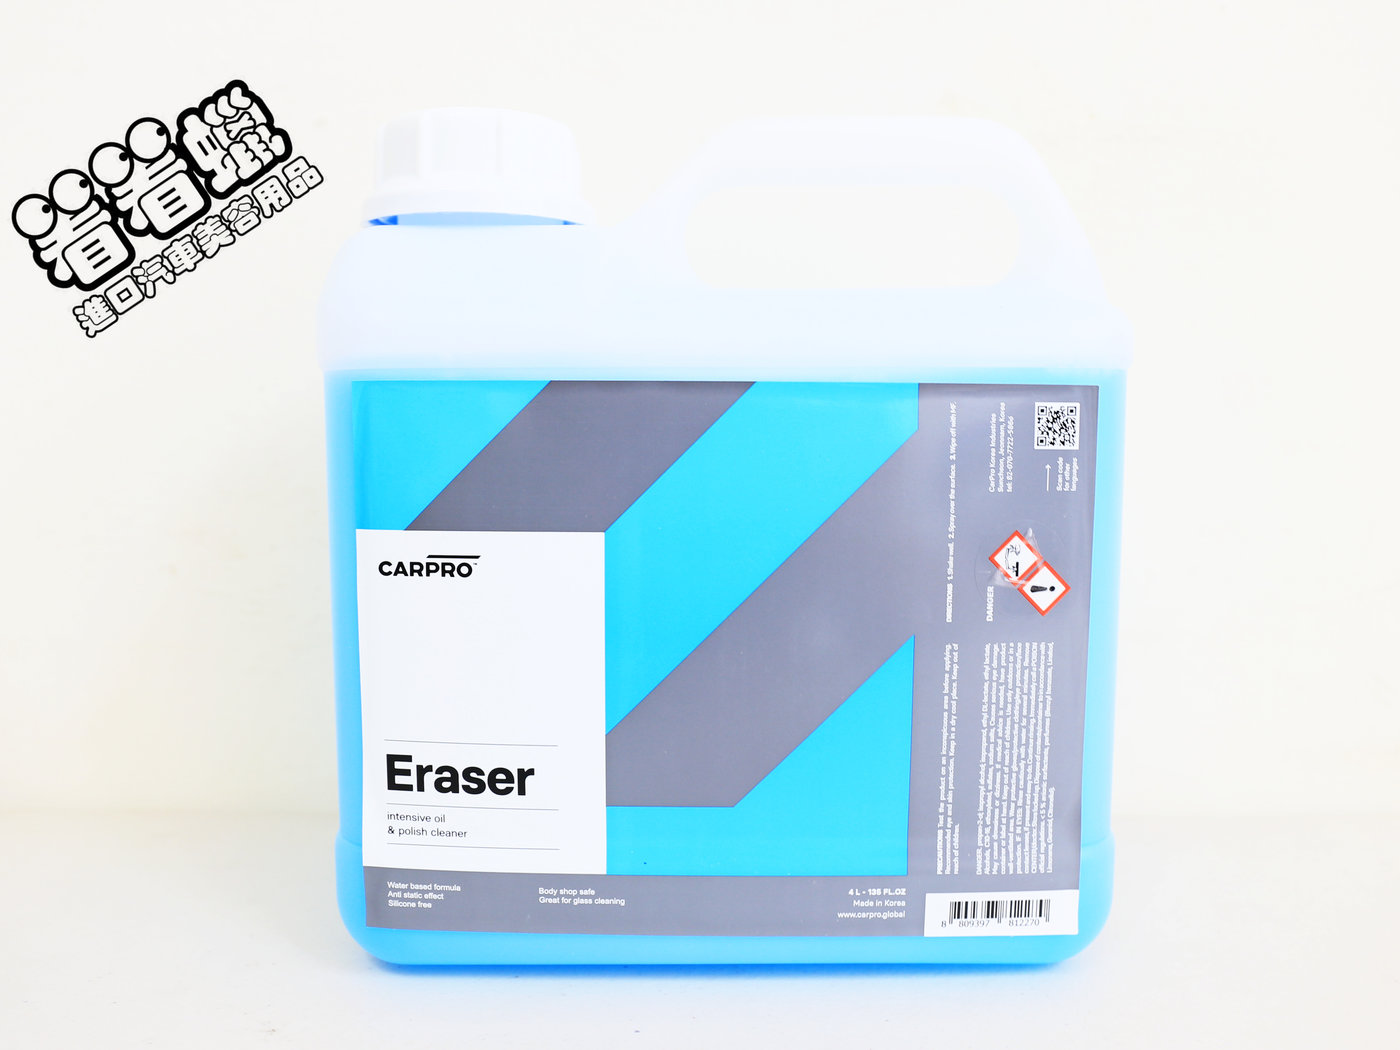 CarPro Eraser Intense Oil & Polish Cleanser (4L)